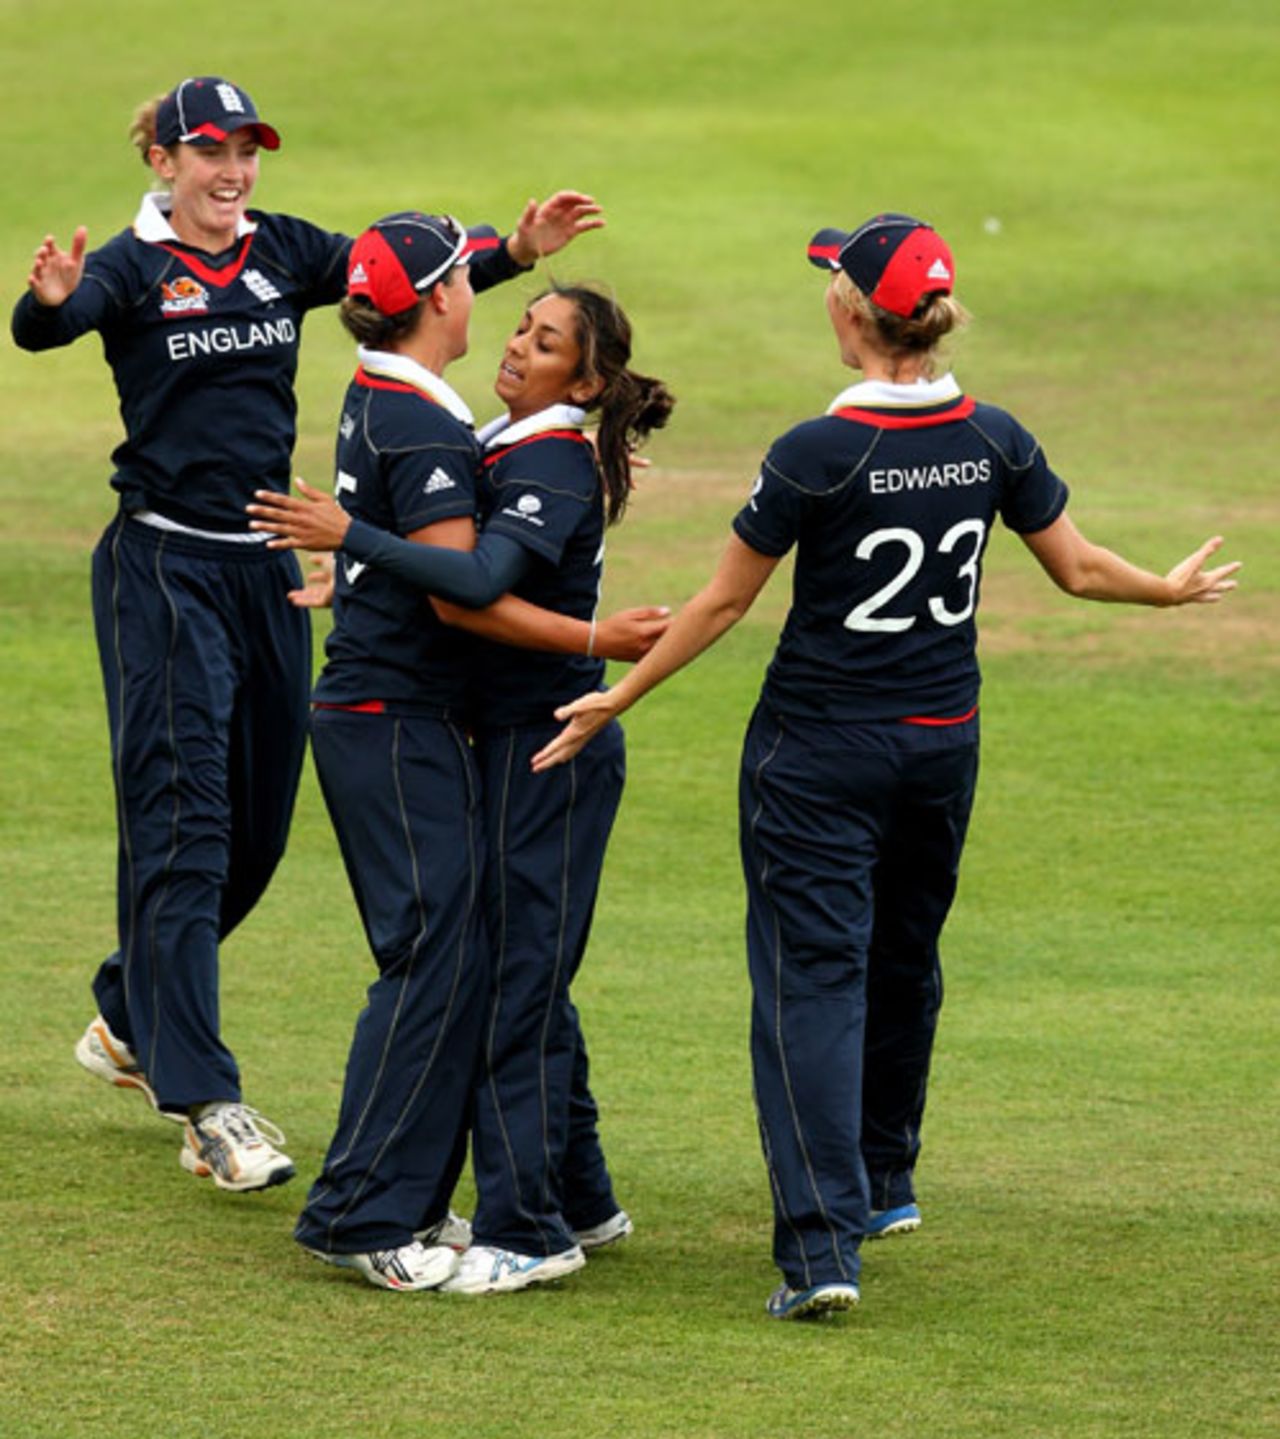 Isa Guha celebrates a wicket, England v Sri Lanka, ICC Women's World Twenty20, Taunton, June 14, 2009 